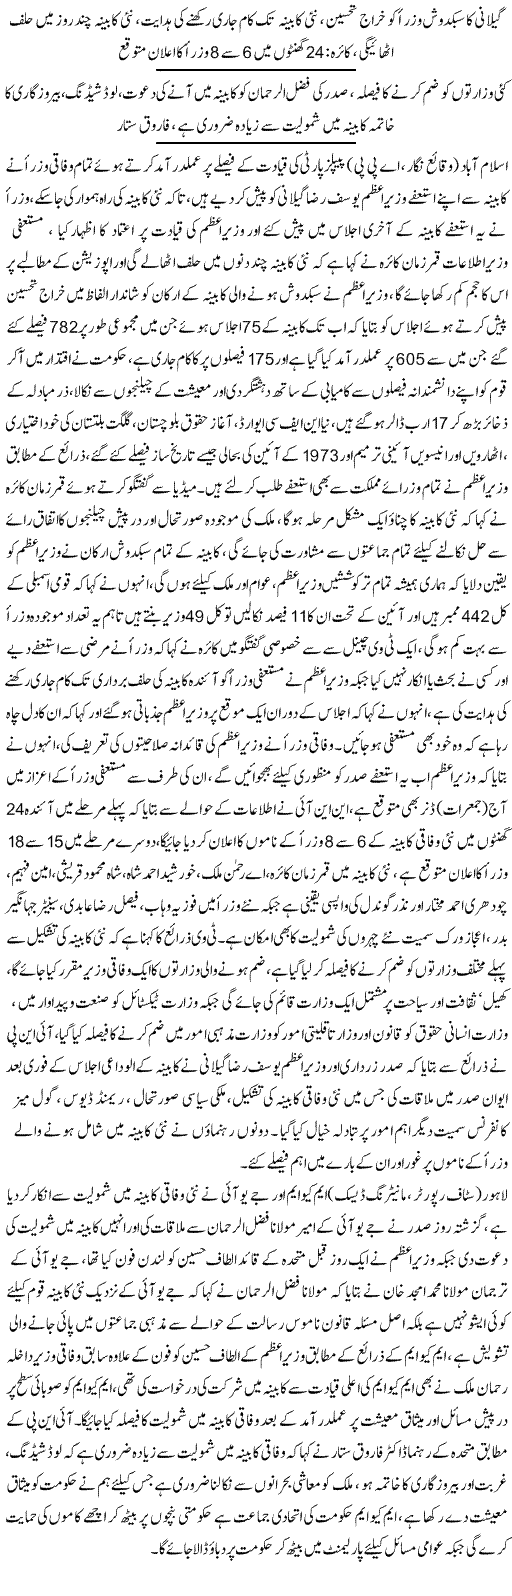 New Federal Cabinet To Take Oath Tomorrow - News in Urdu